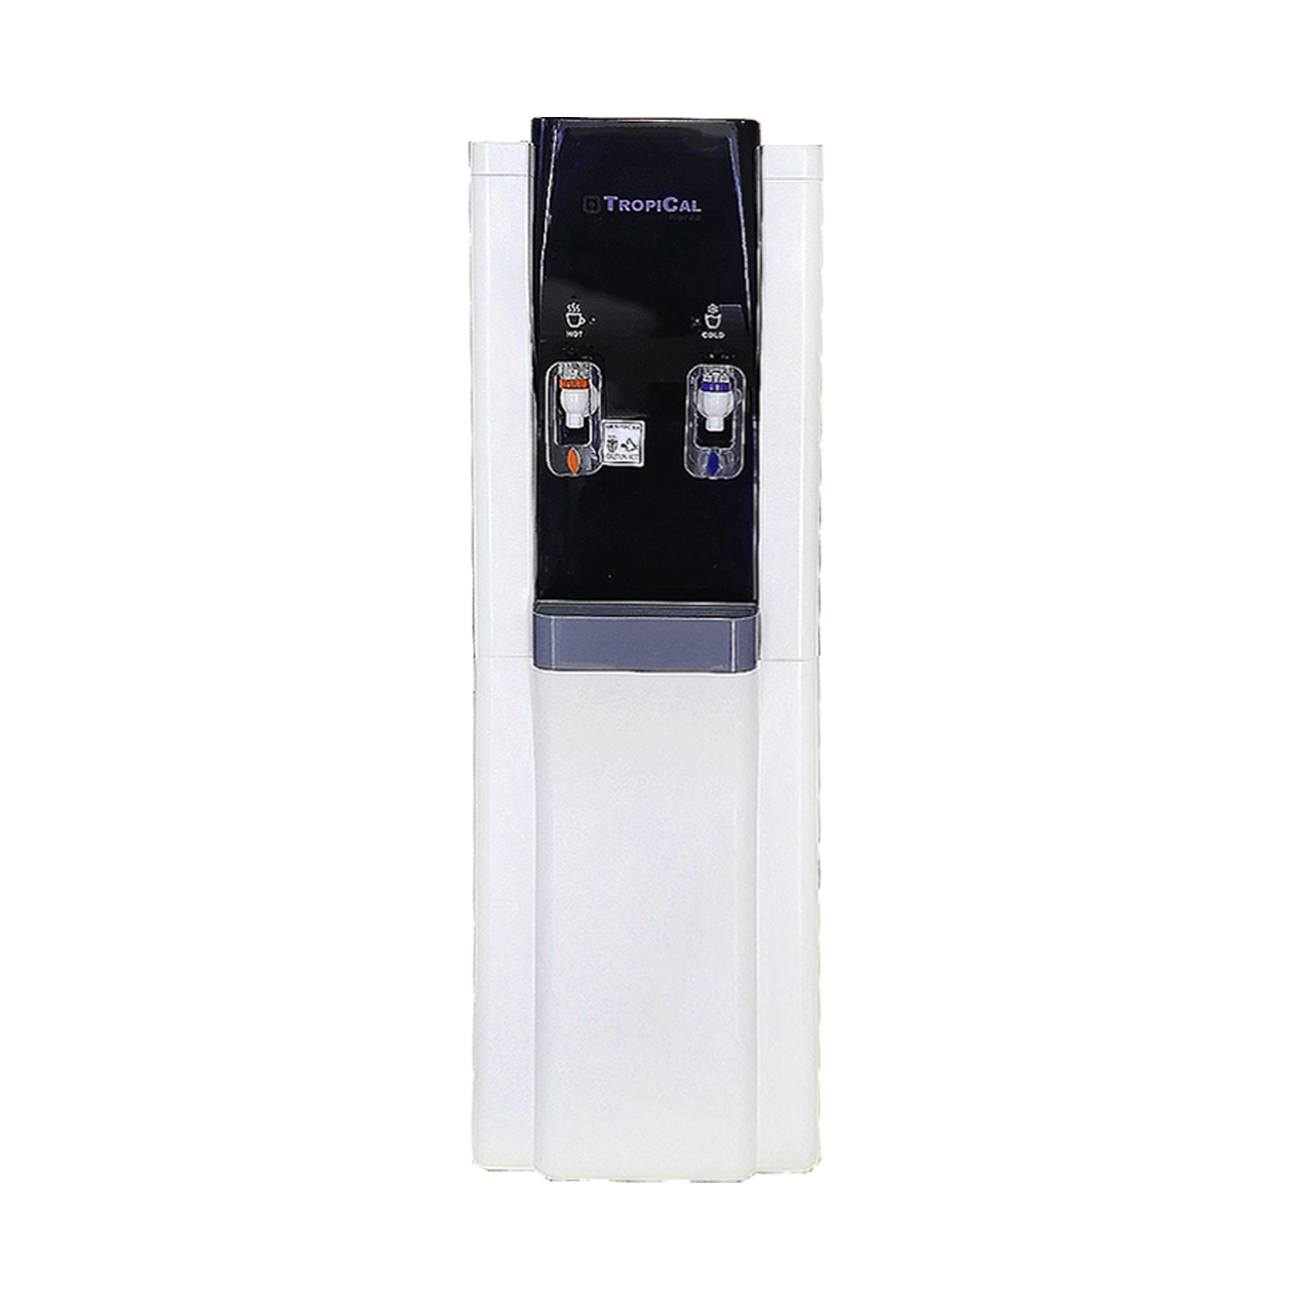 TROPICAL Water Dispenser  Made in Korea